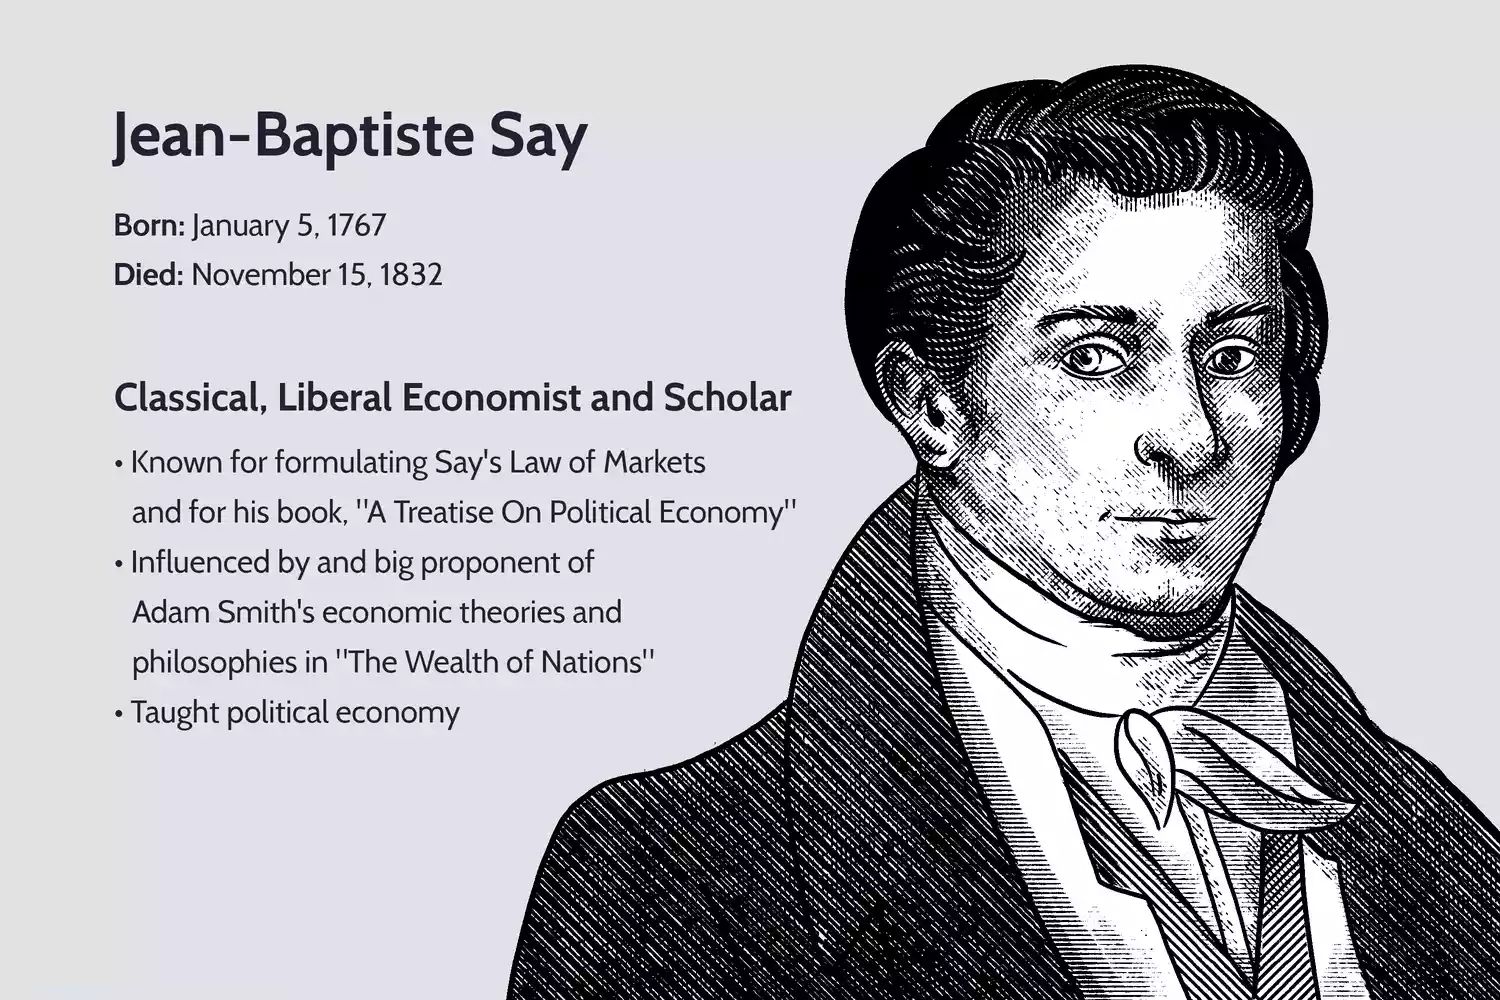 Jean-Baptiste Say - Liberal Economist and Scholar